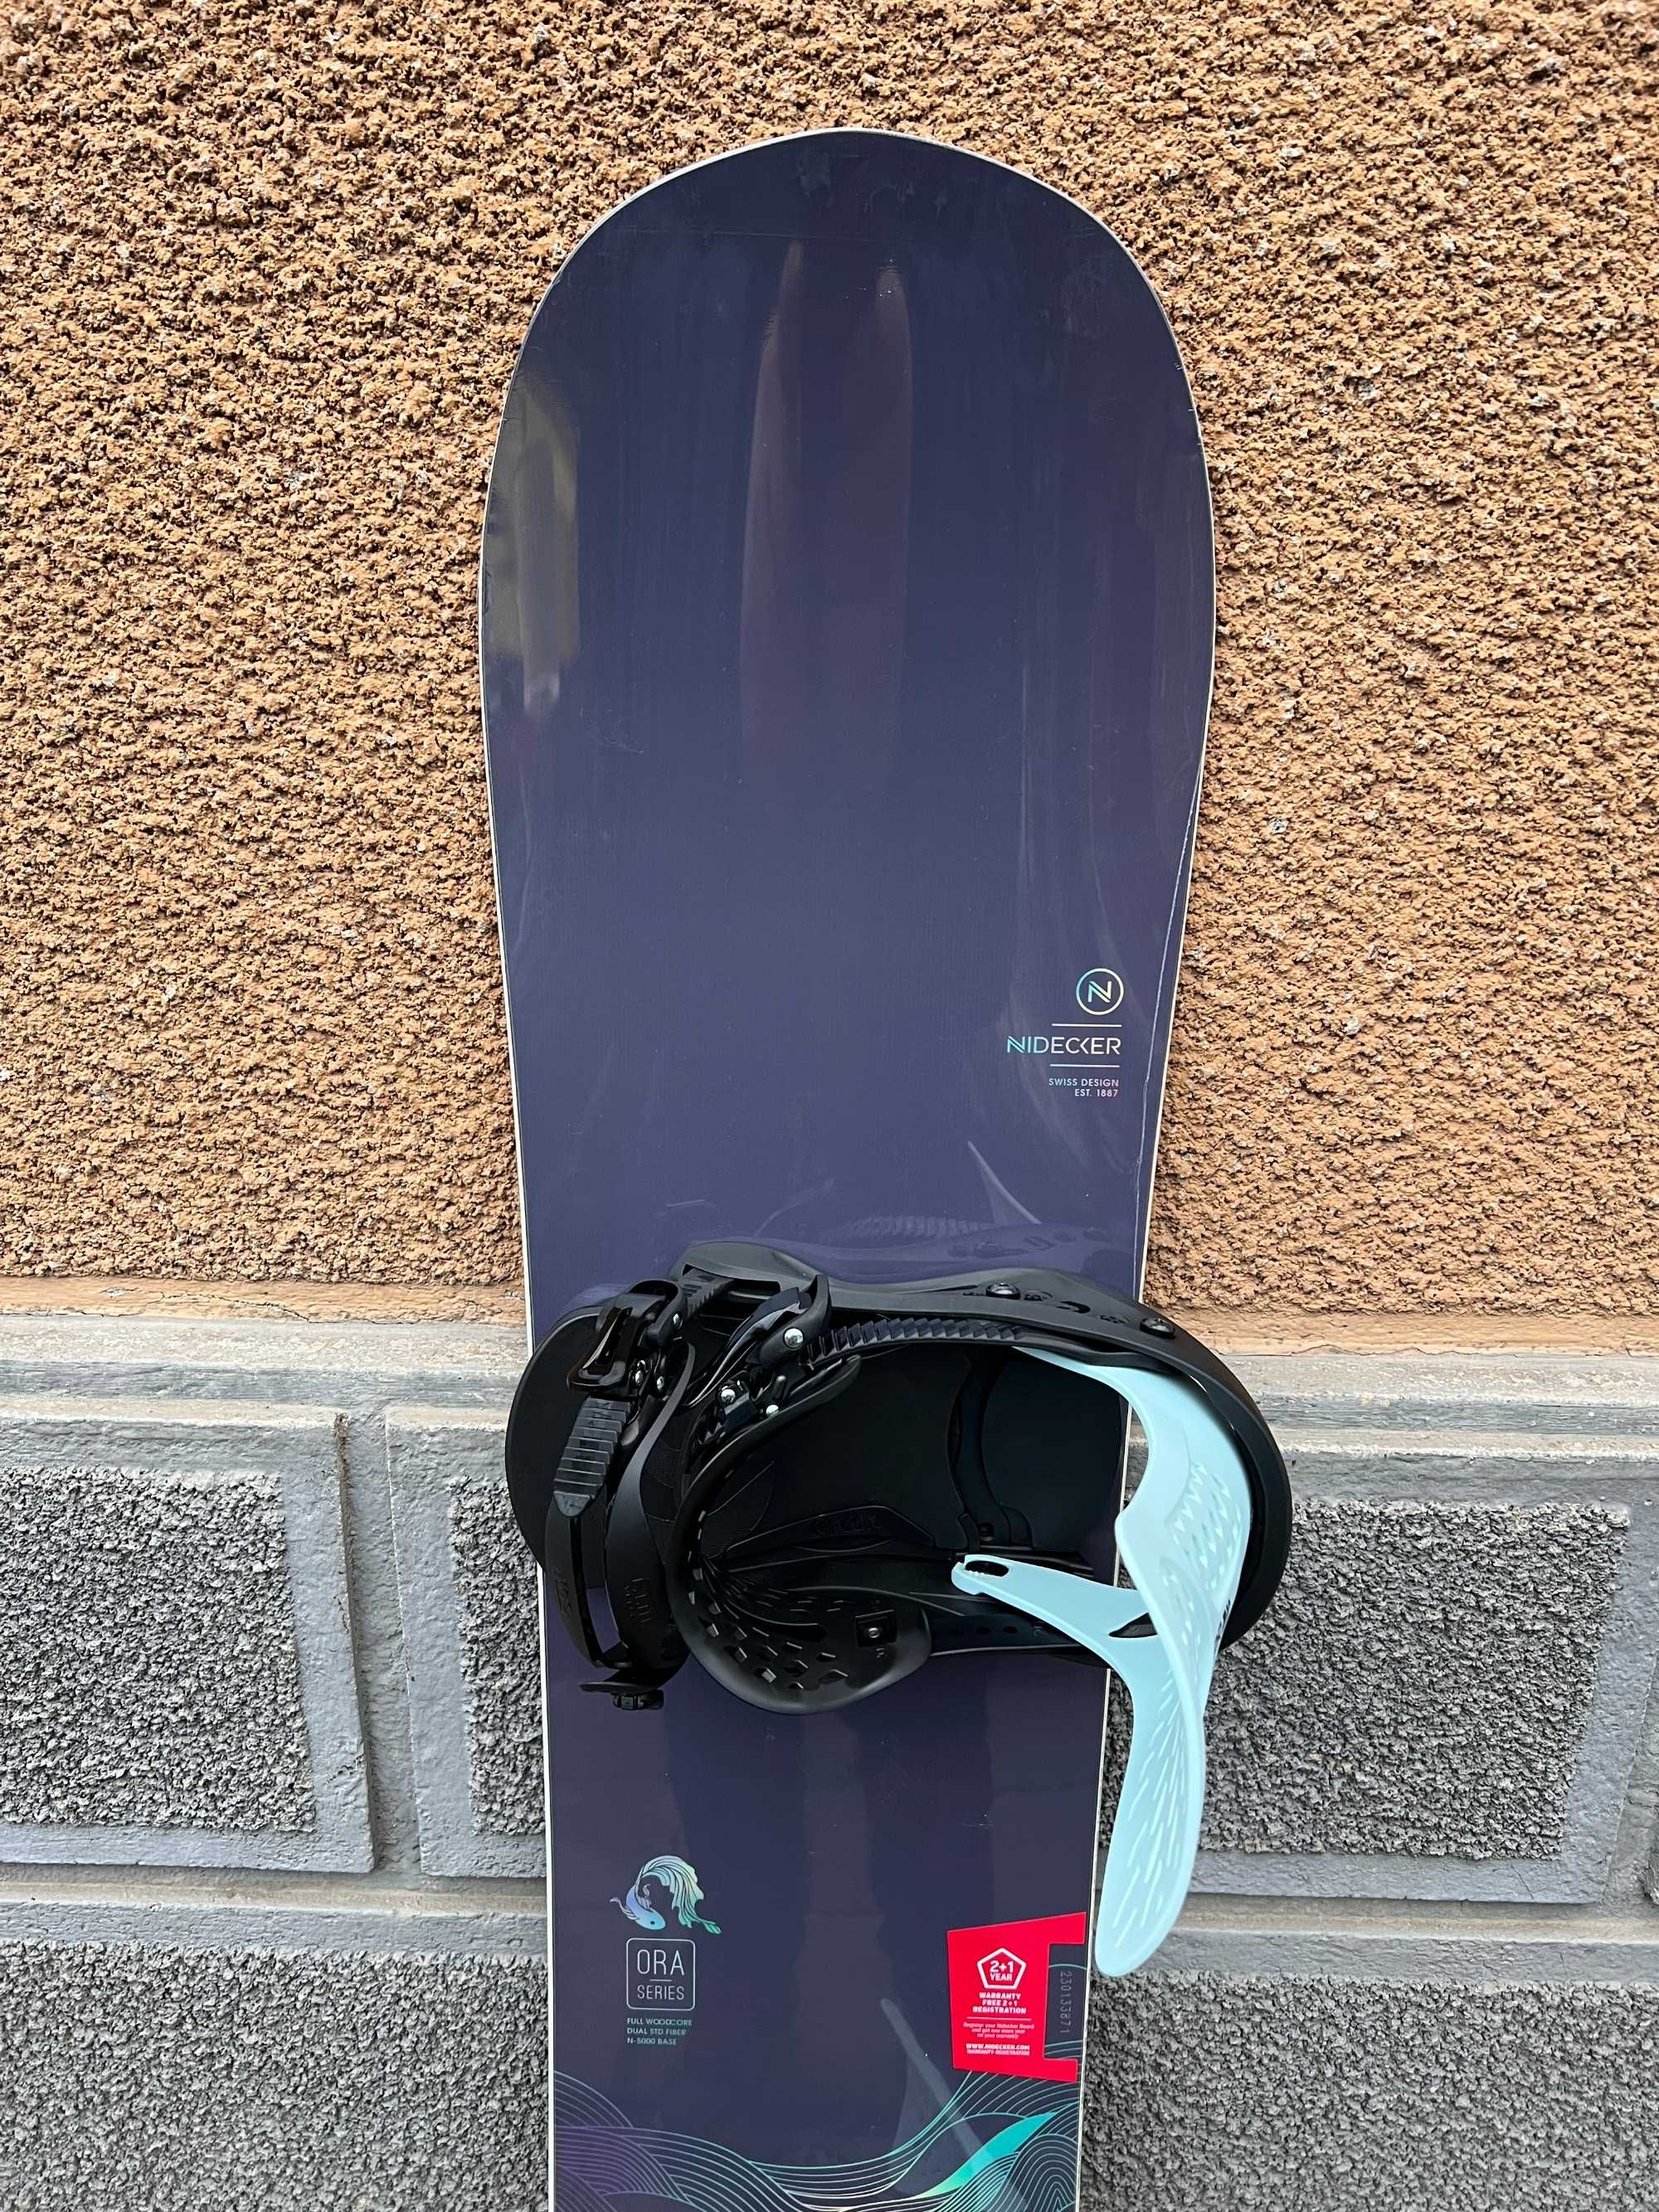 placa noua snowboard nidecker ora series L147